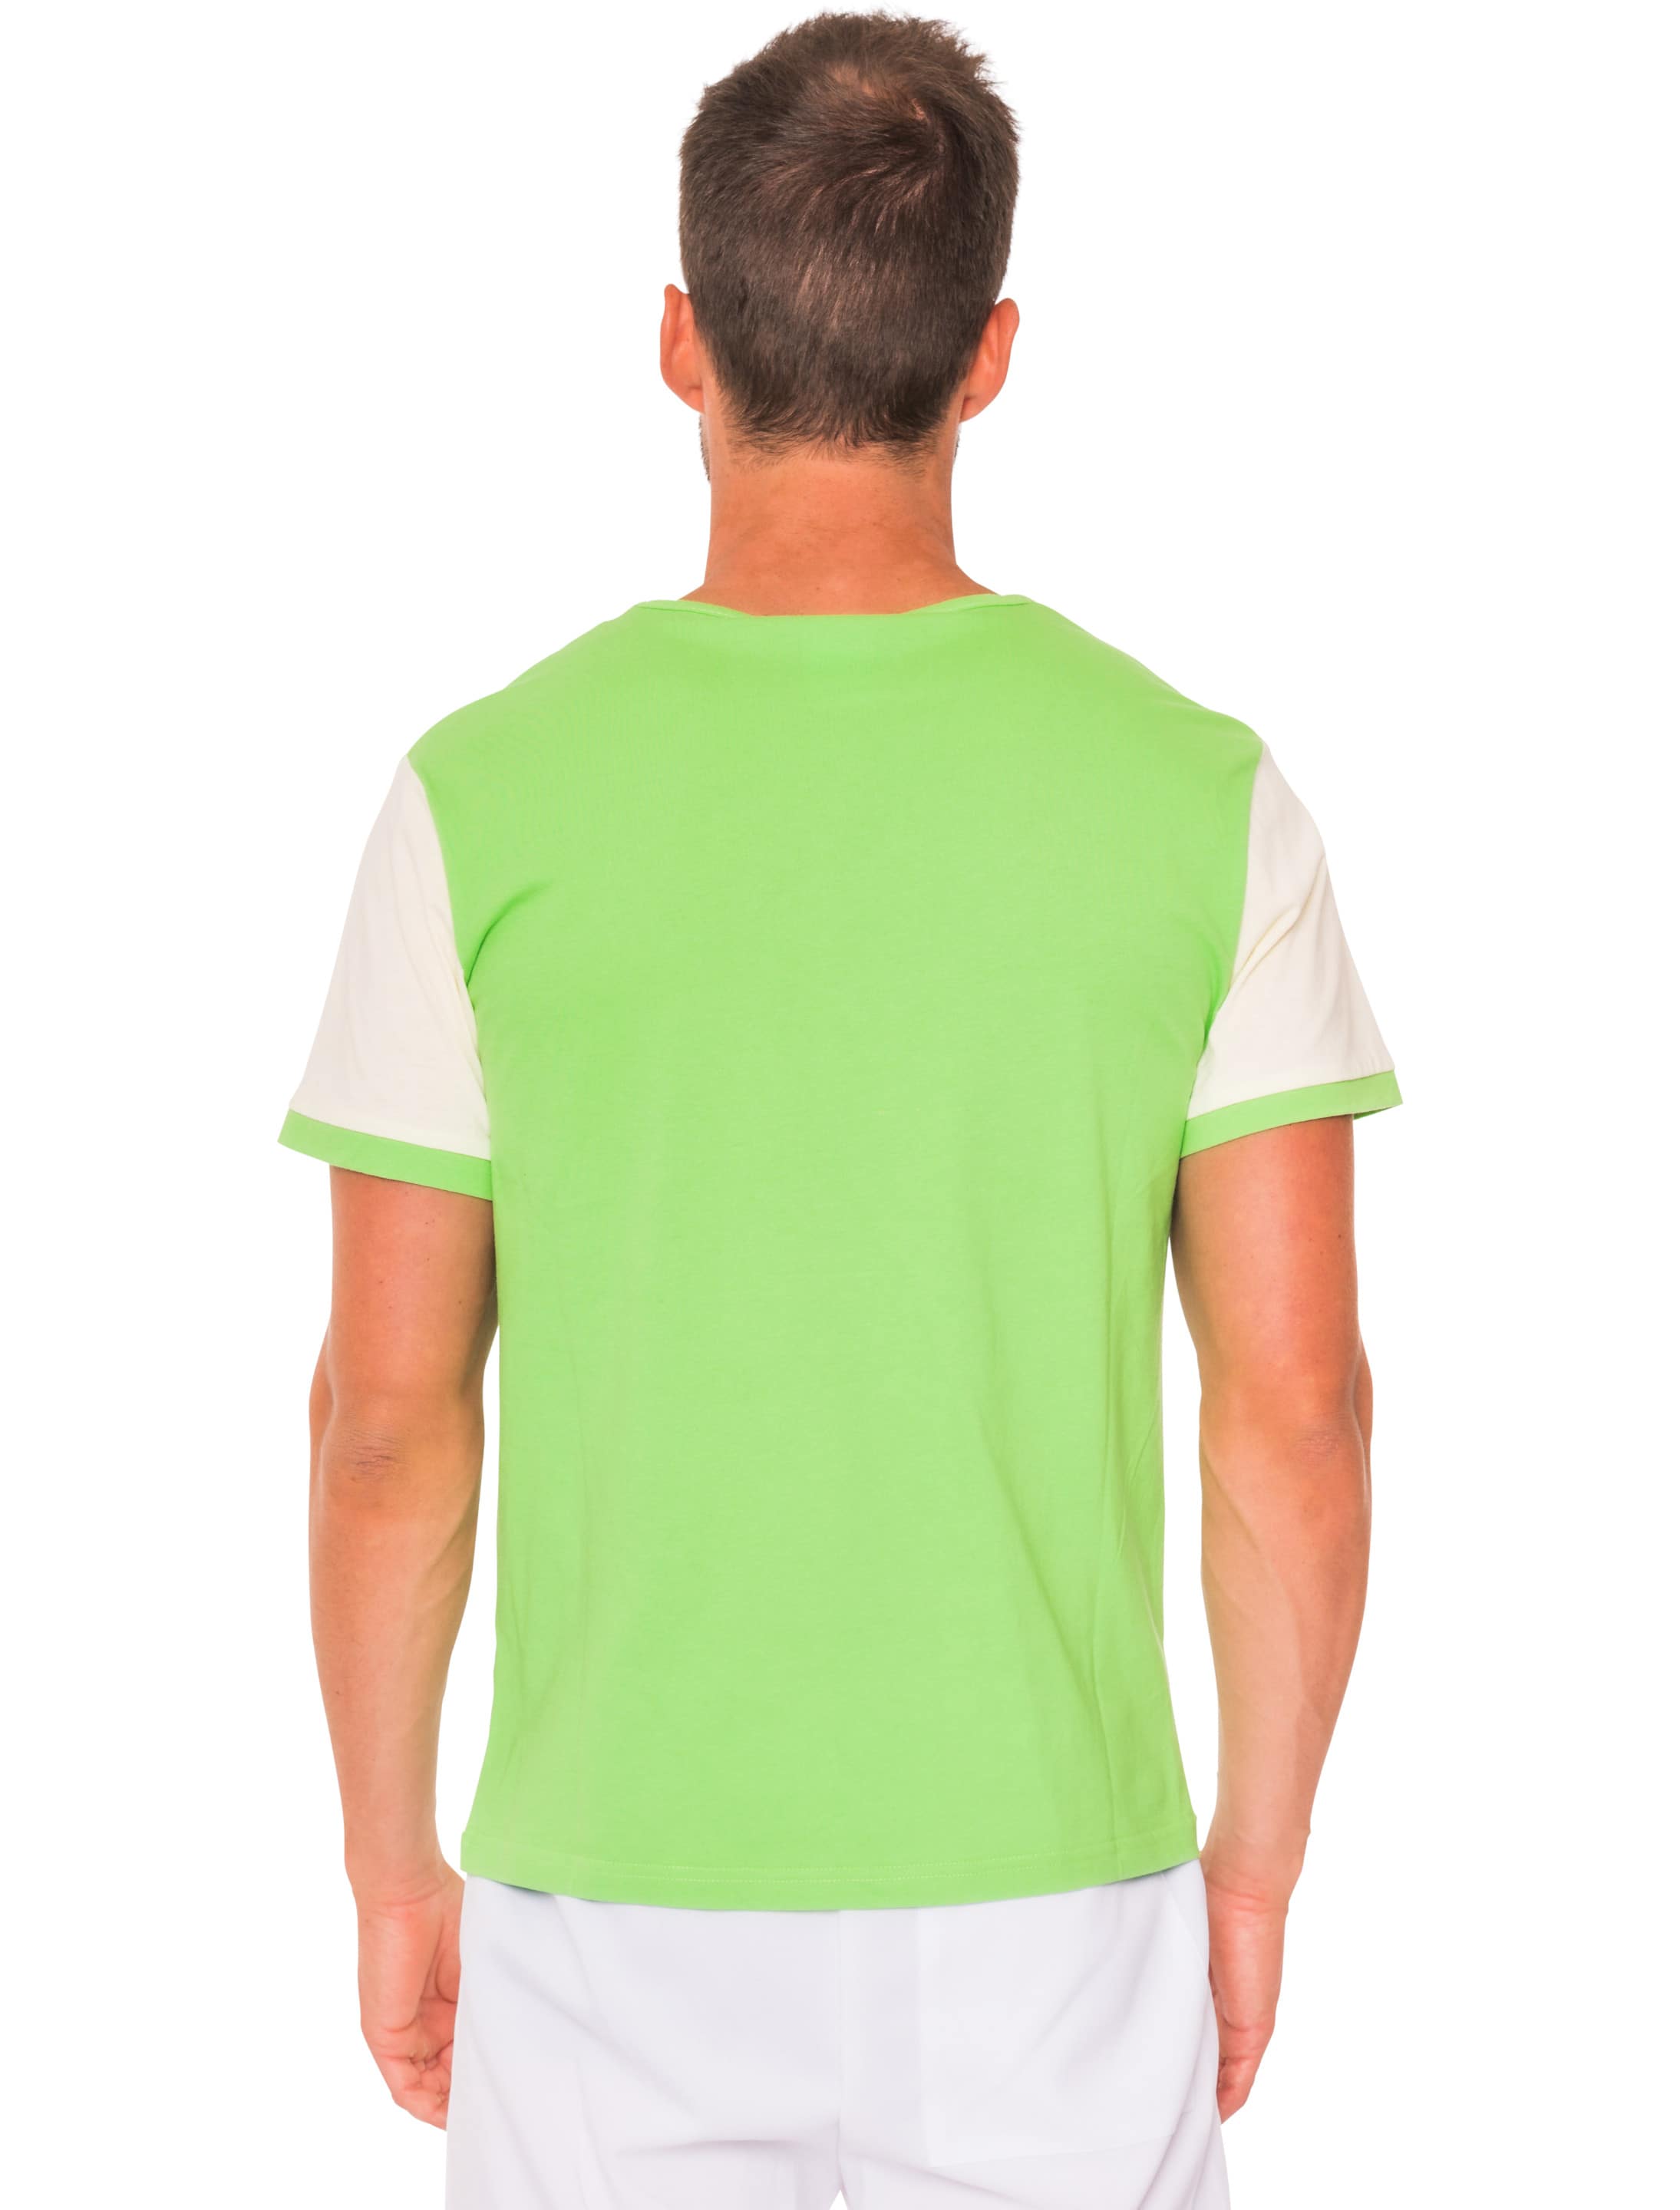 T-Shirt FLIMM Herren Herren grün S